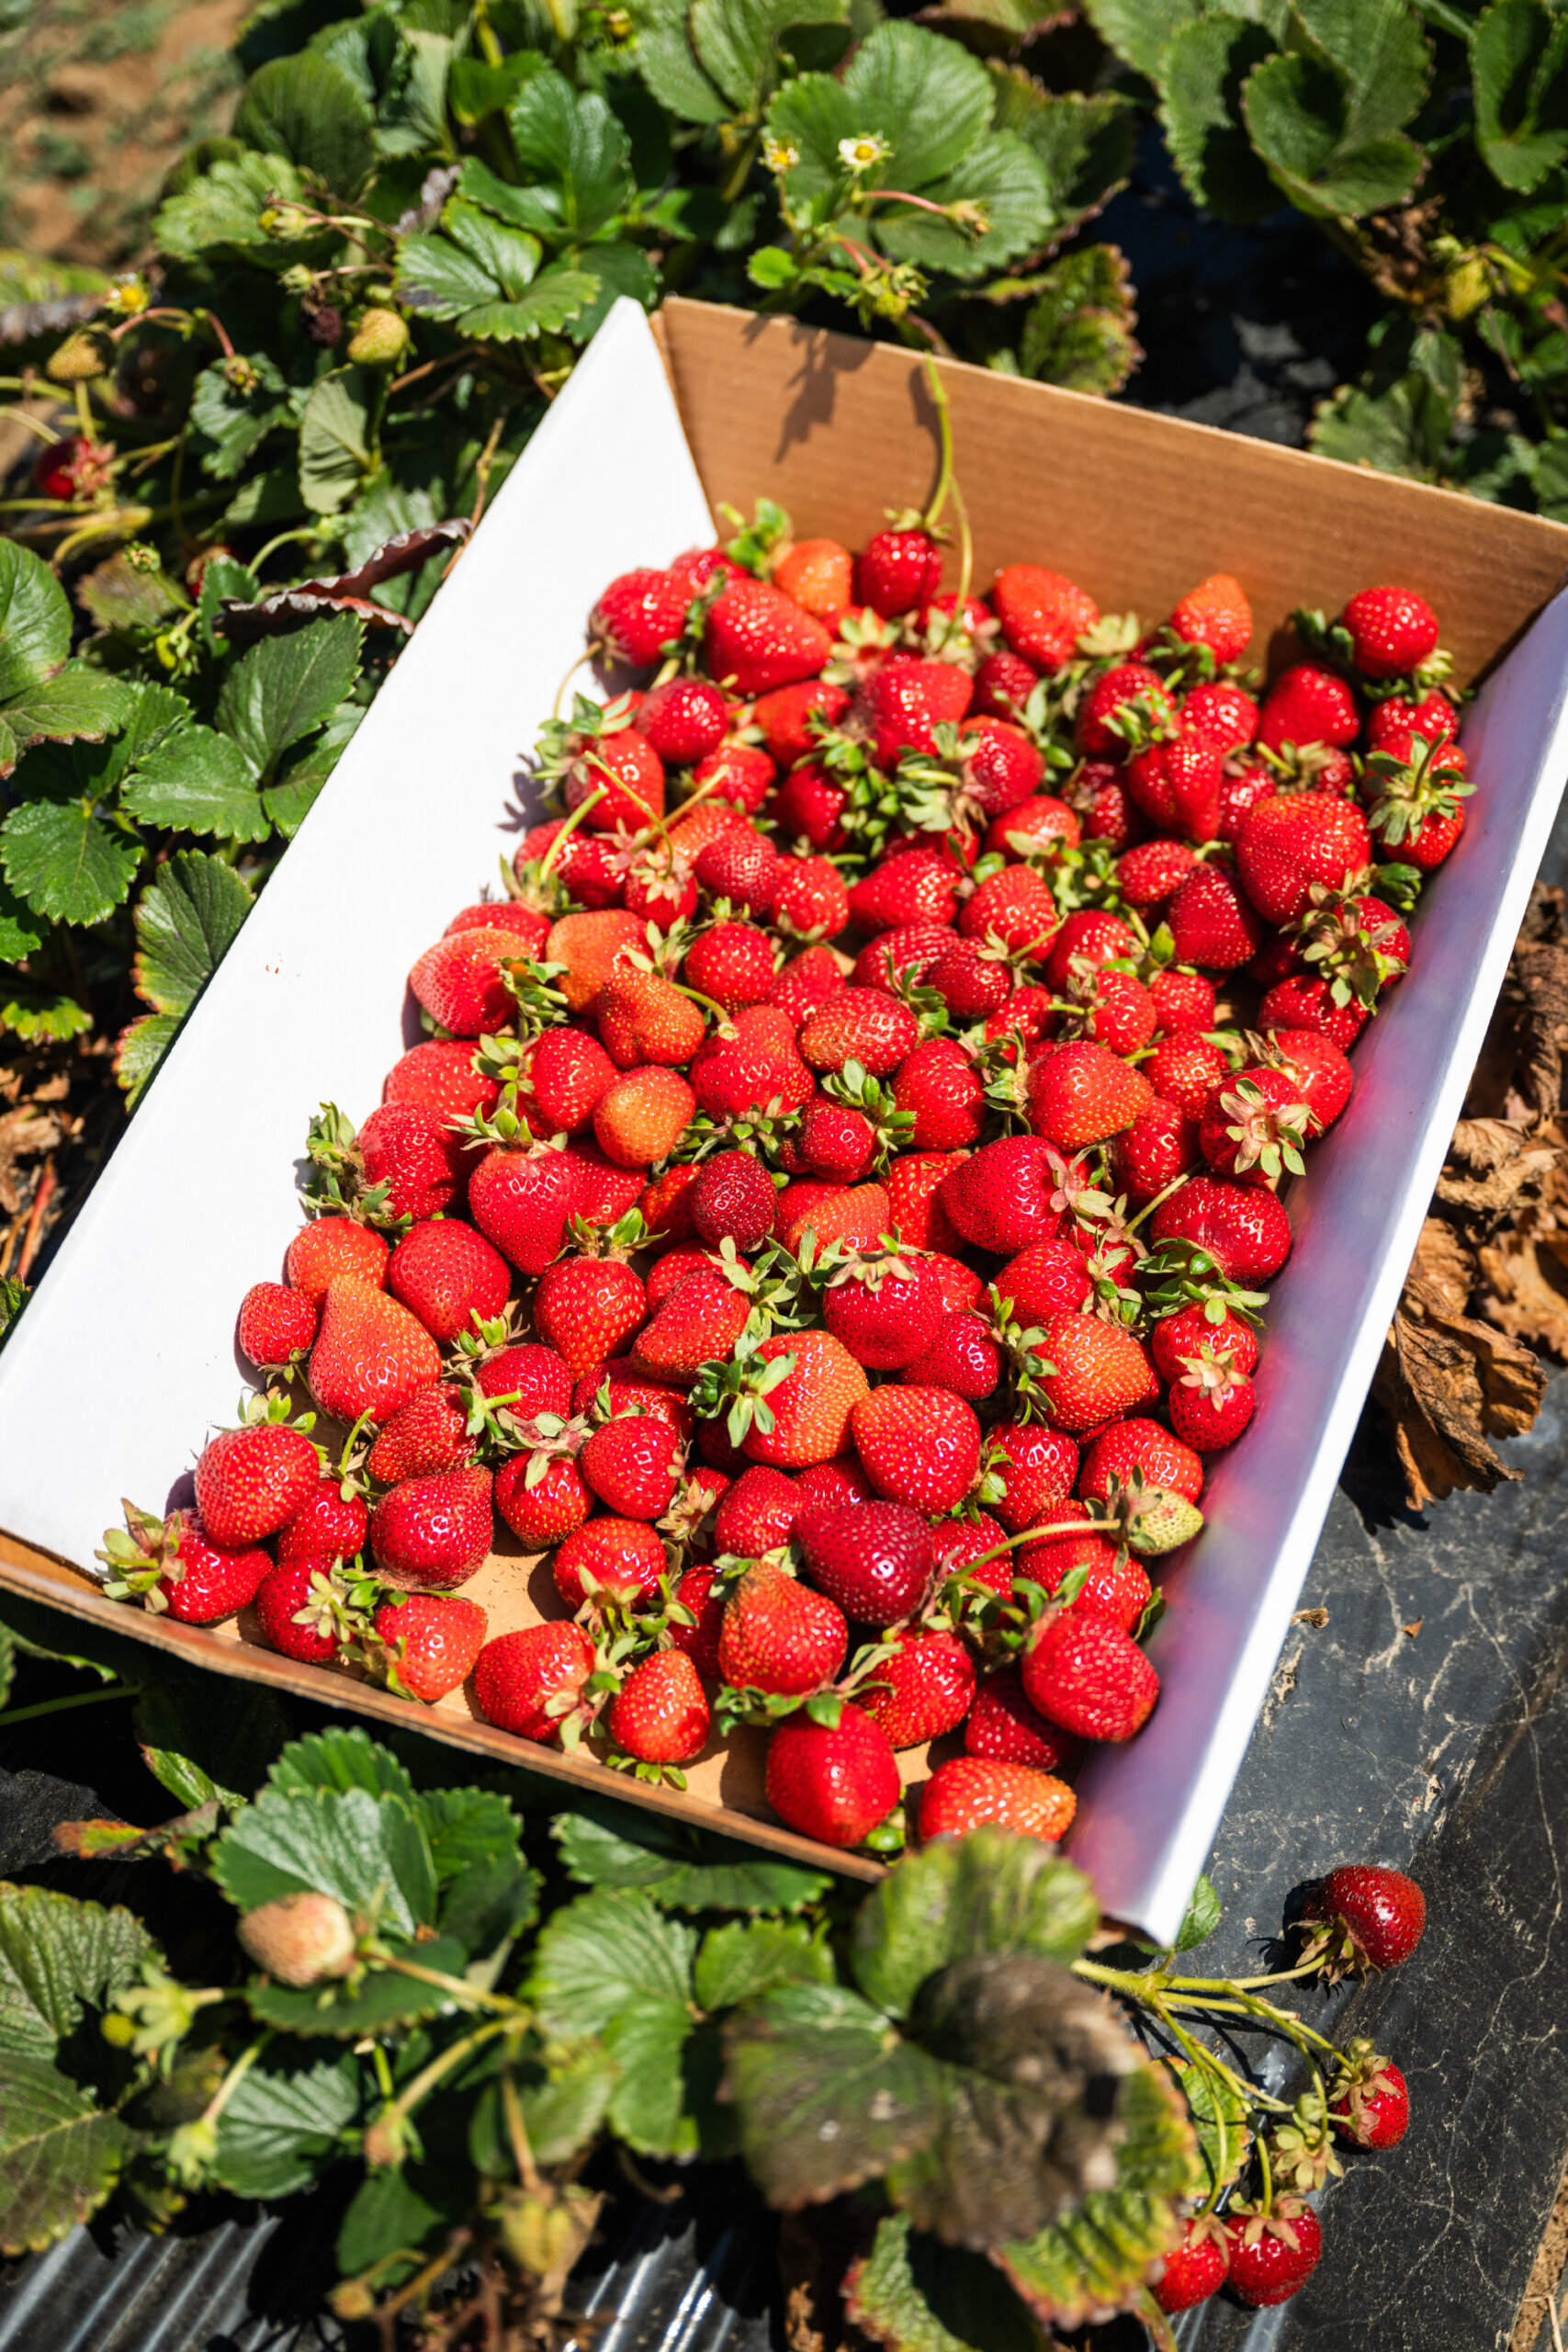 A full tray of California strawberries